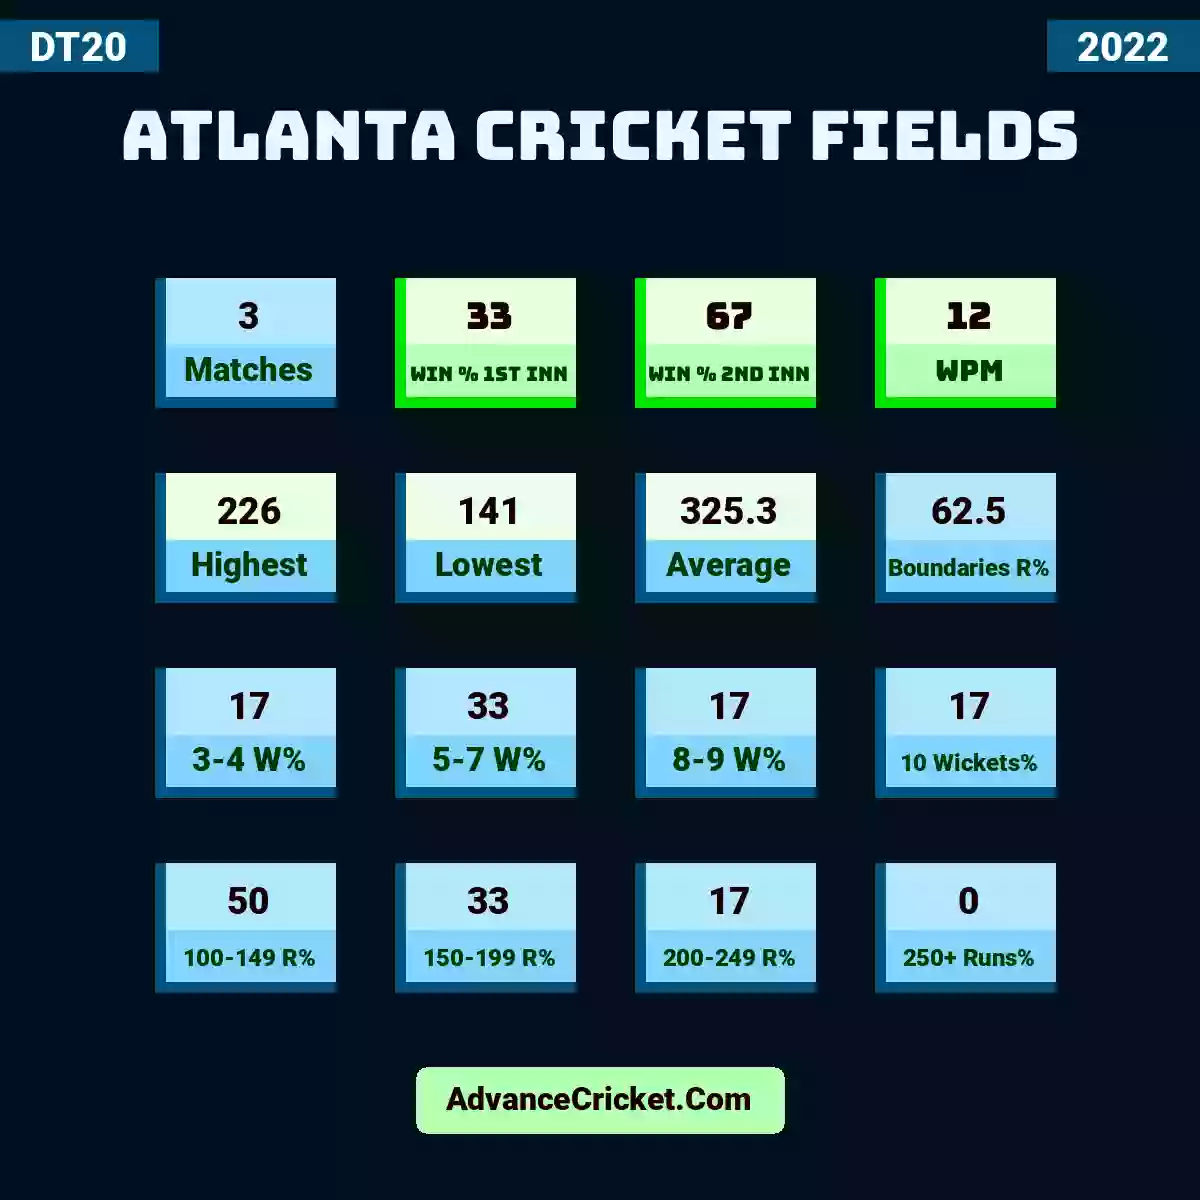 Image showing Atlanta Cricket Fields with Matches: 3, Win % 1st Inn: 33, Win % 2nd Inn: 67, WPM: 12, Highest: 226, Lowest: 141, Average: 325.3, Boundaries R%: 62.5, 3-4 W%: 17, 5-7 W%: 33, 8-9 W%: 17, 10 Wickets%: 17, 100-149 R%: 50, 150-199 R%: 33, 200-249 R%: 17, 250+ Runs%: 0.